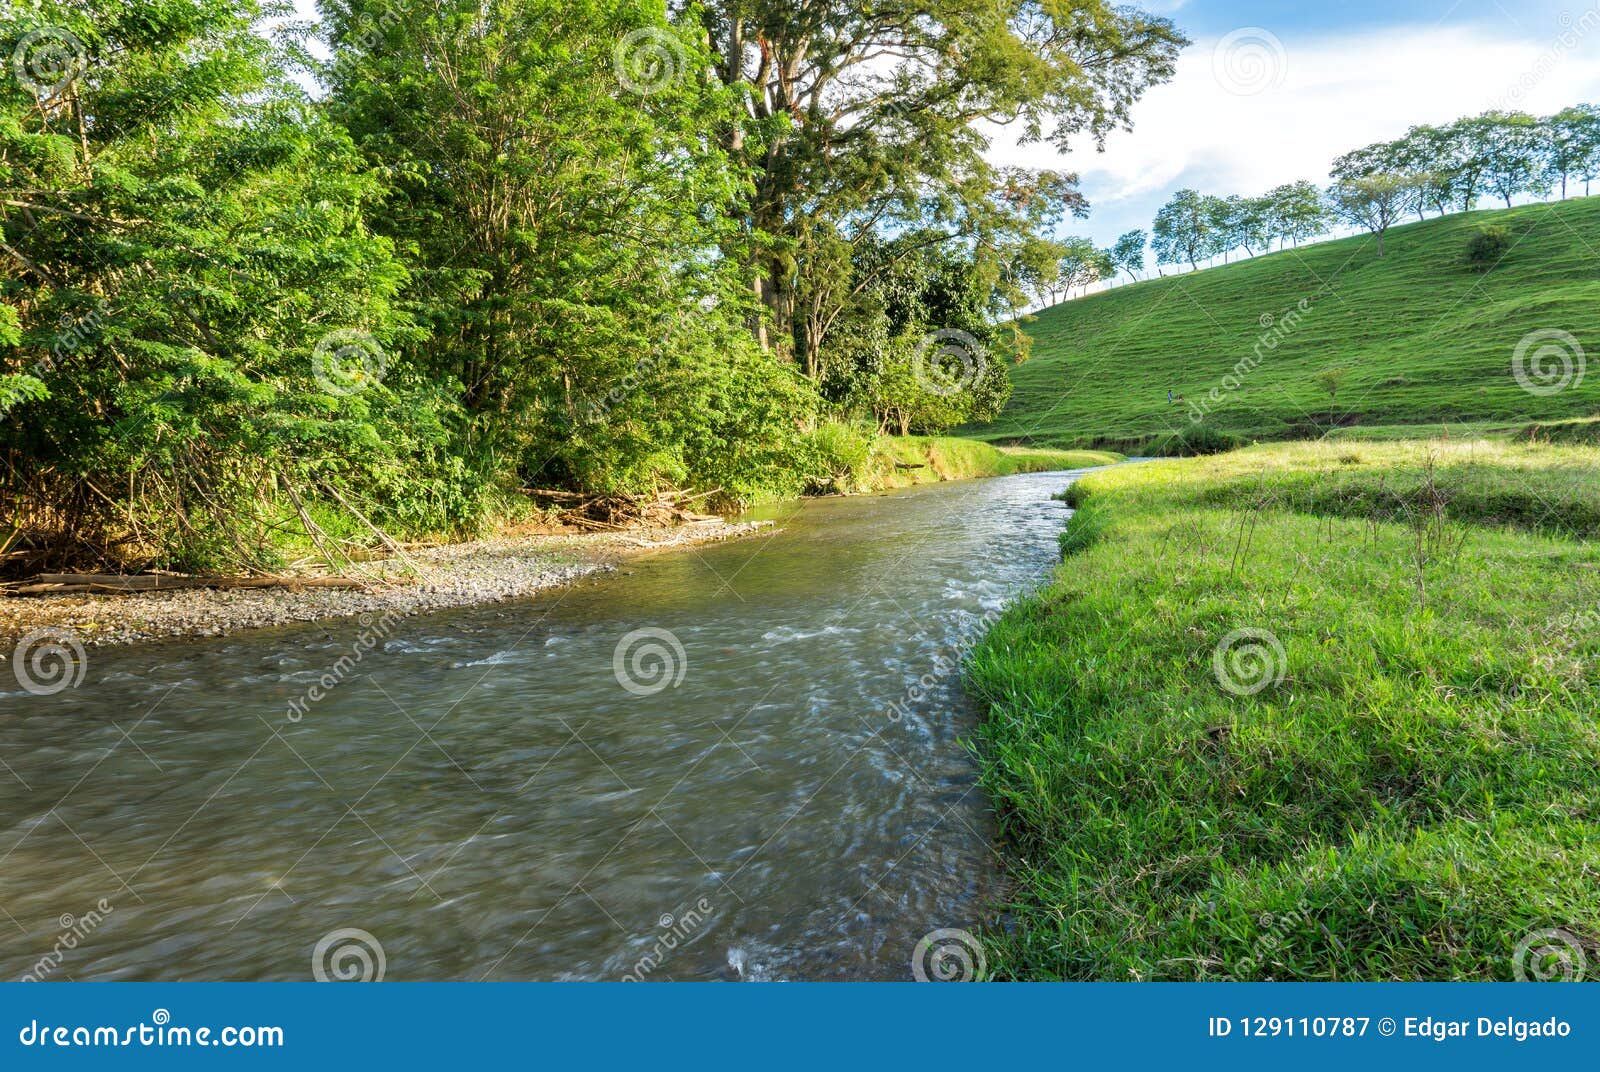 small river and landscape